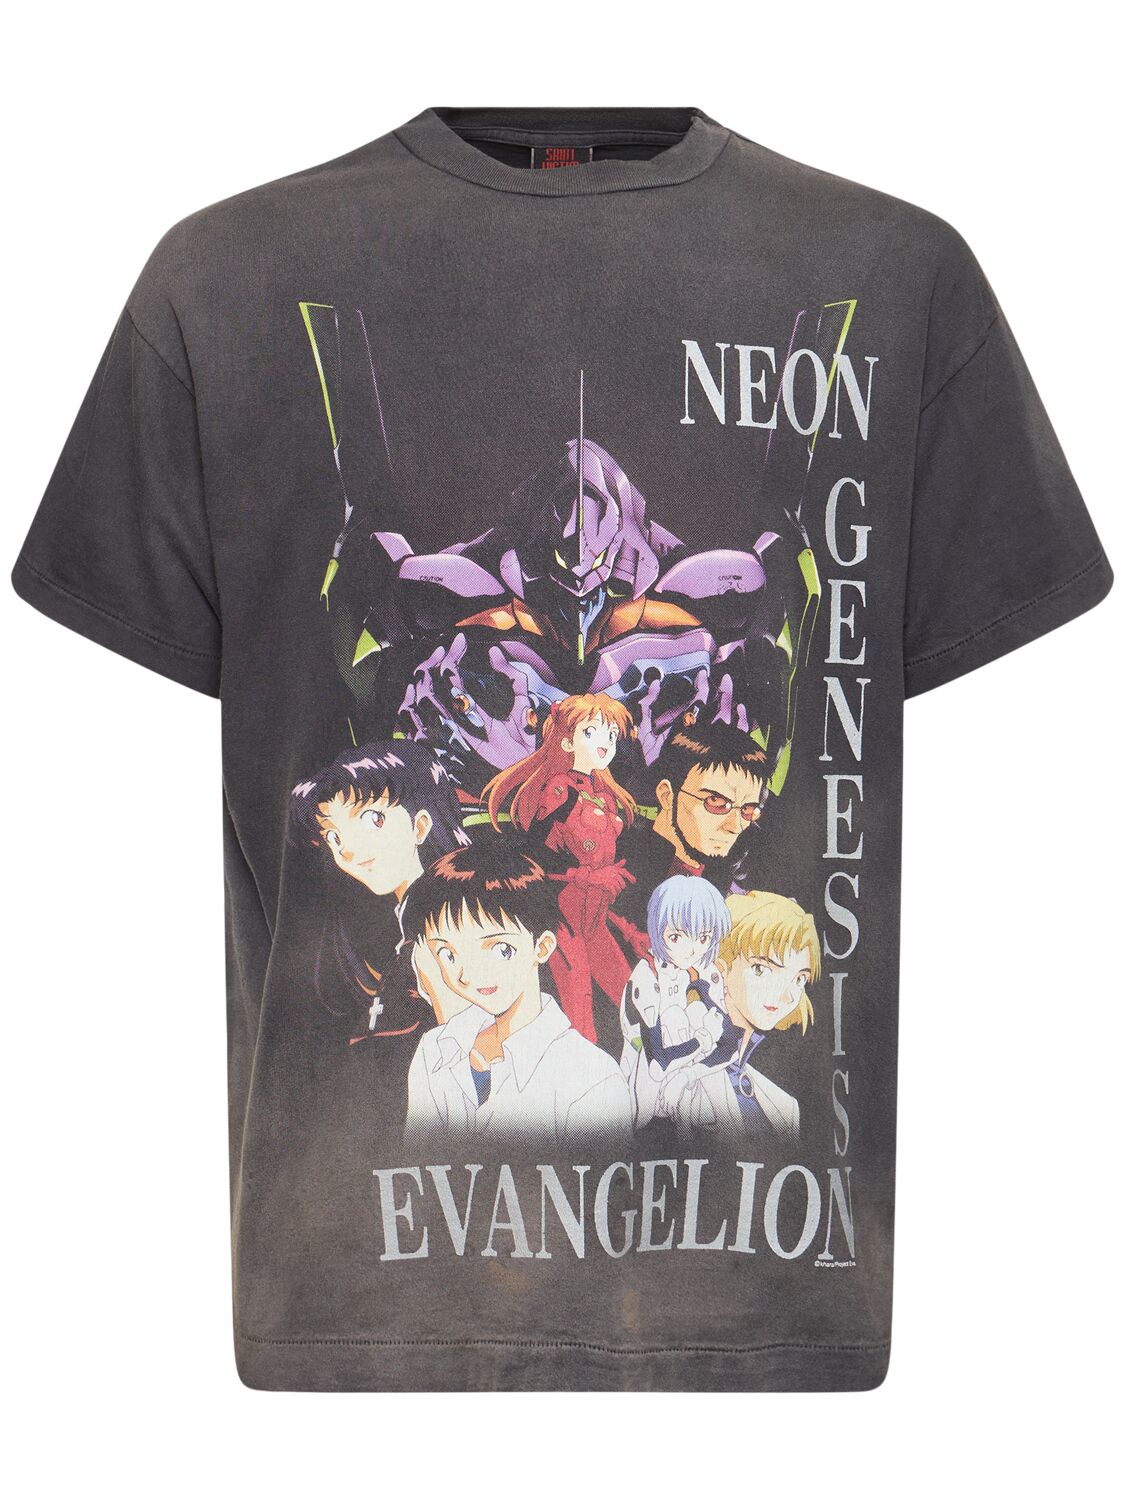 Evangelion X Saint Mx6 T-shirt